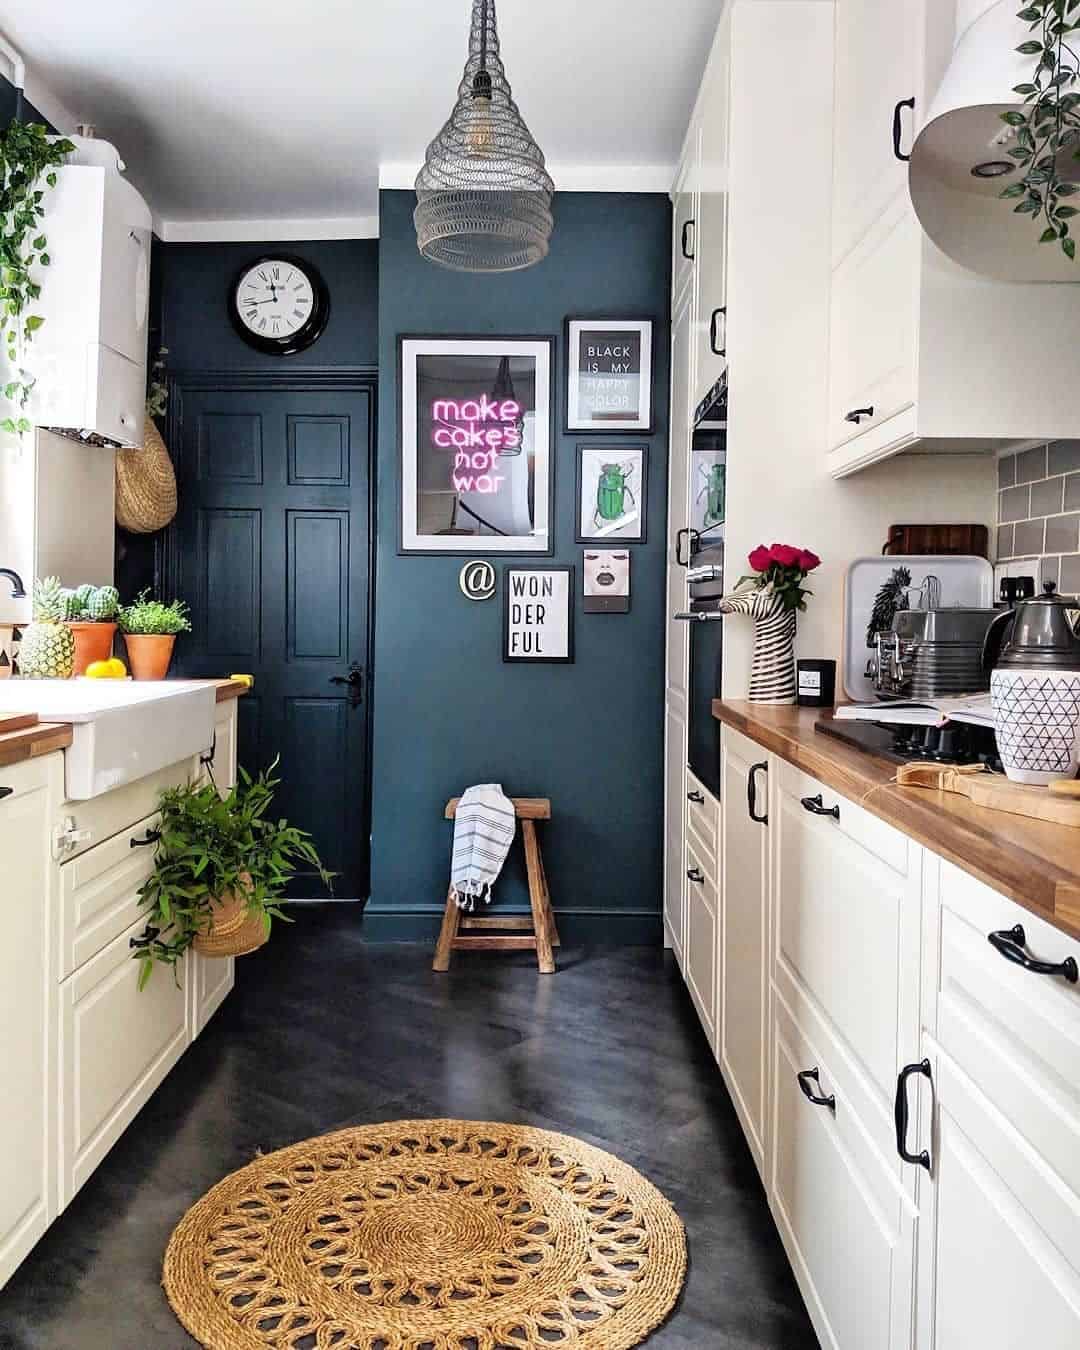 23 Cozy and Chic Small Kitchen Design Ideas